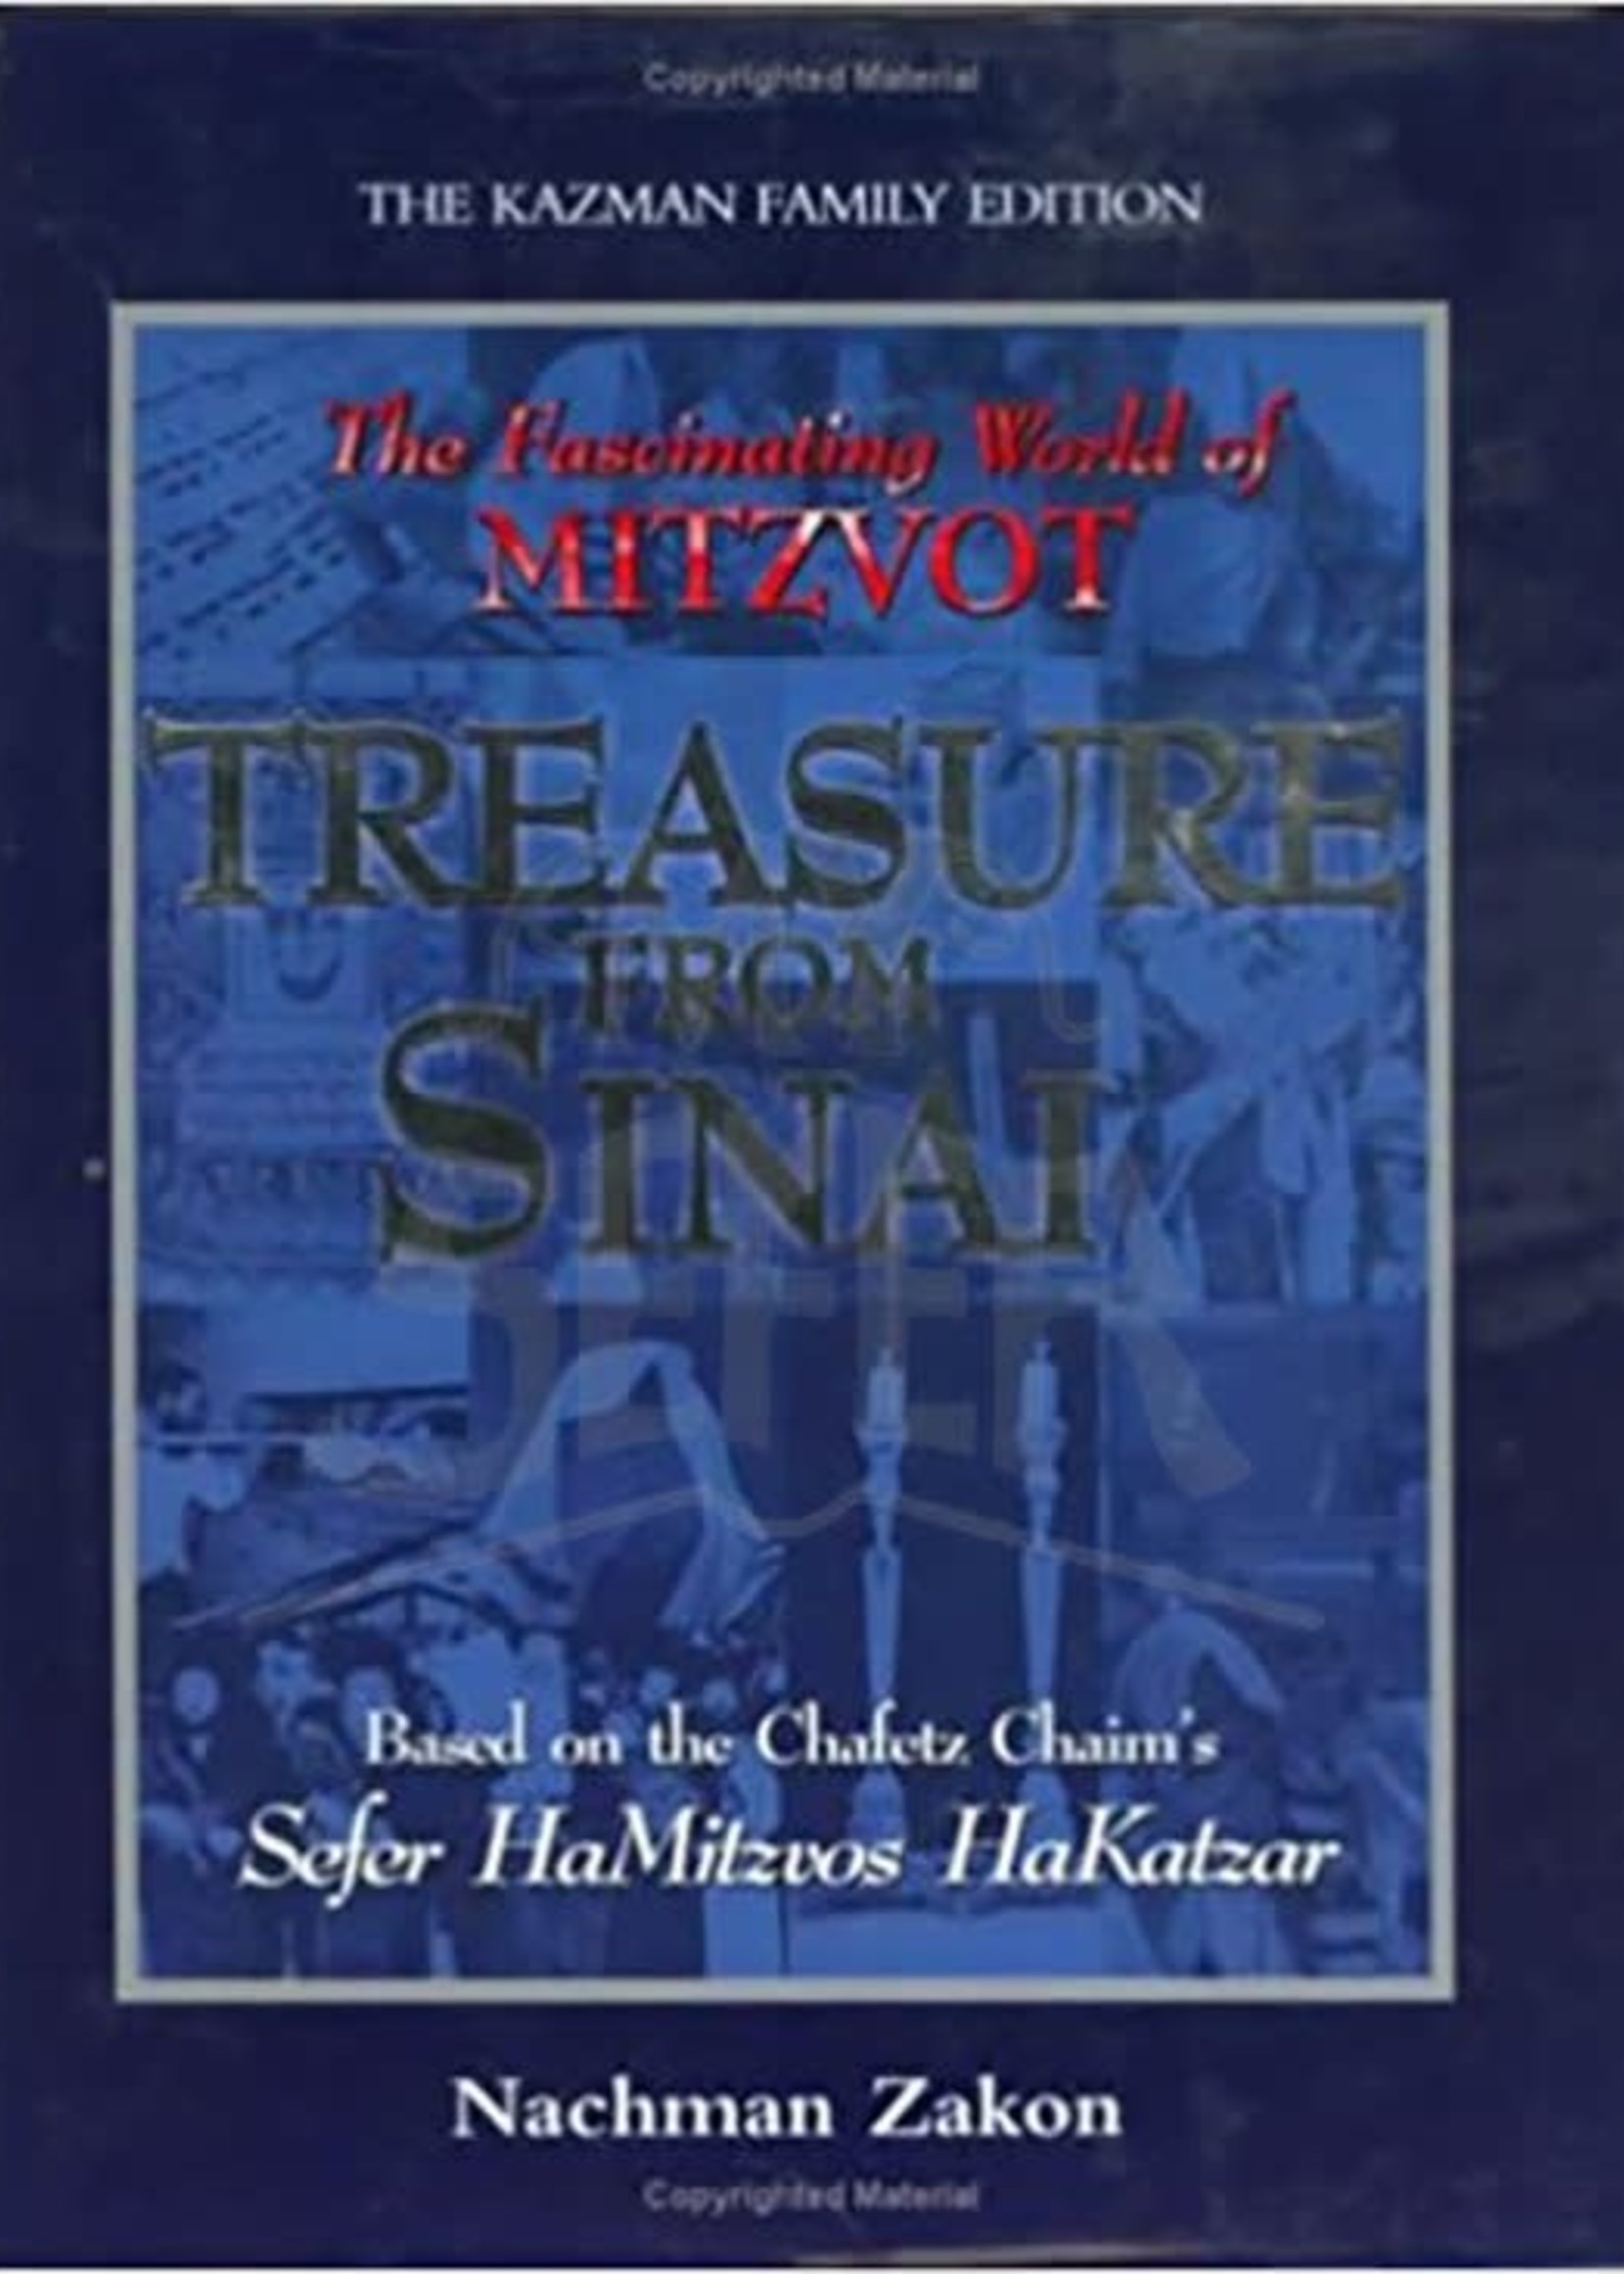 Rabbi Nachman Zakon Treasure from Sinai